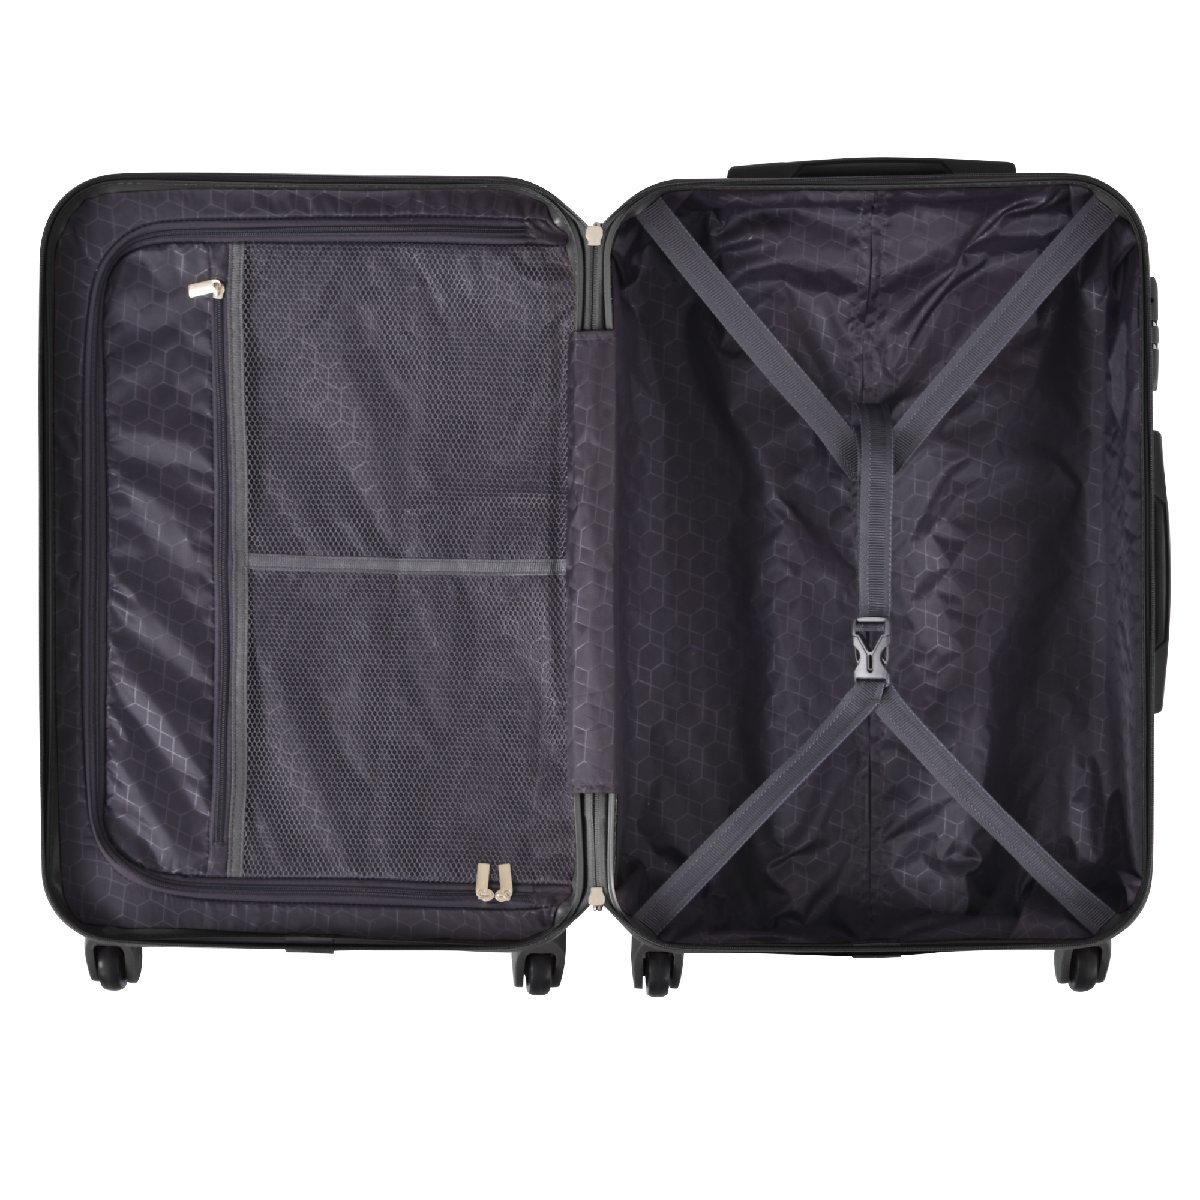  suitcase carry bag M size Carry case travel travel super light weight TSA lock installing 4 day -7 day medium sized white black 